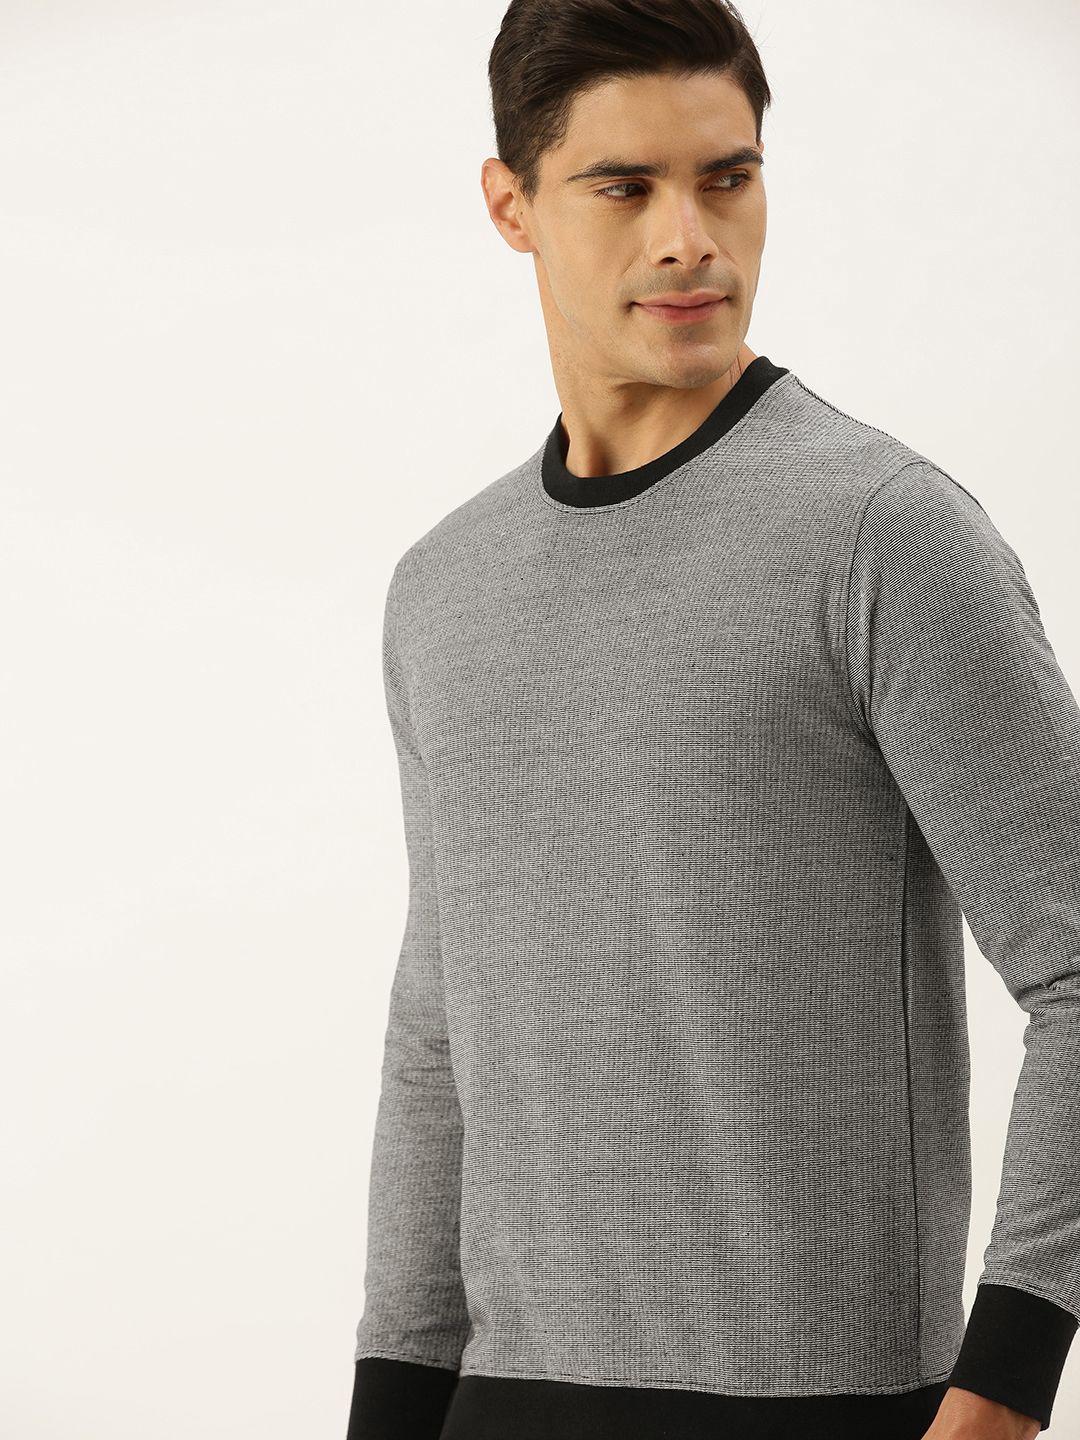 arise men grey pure cotton sweatshirt